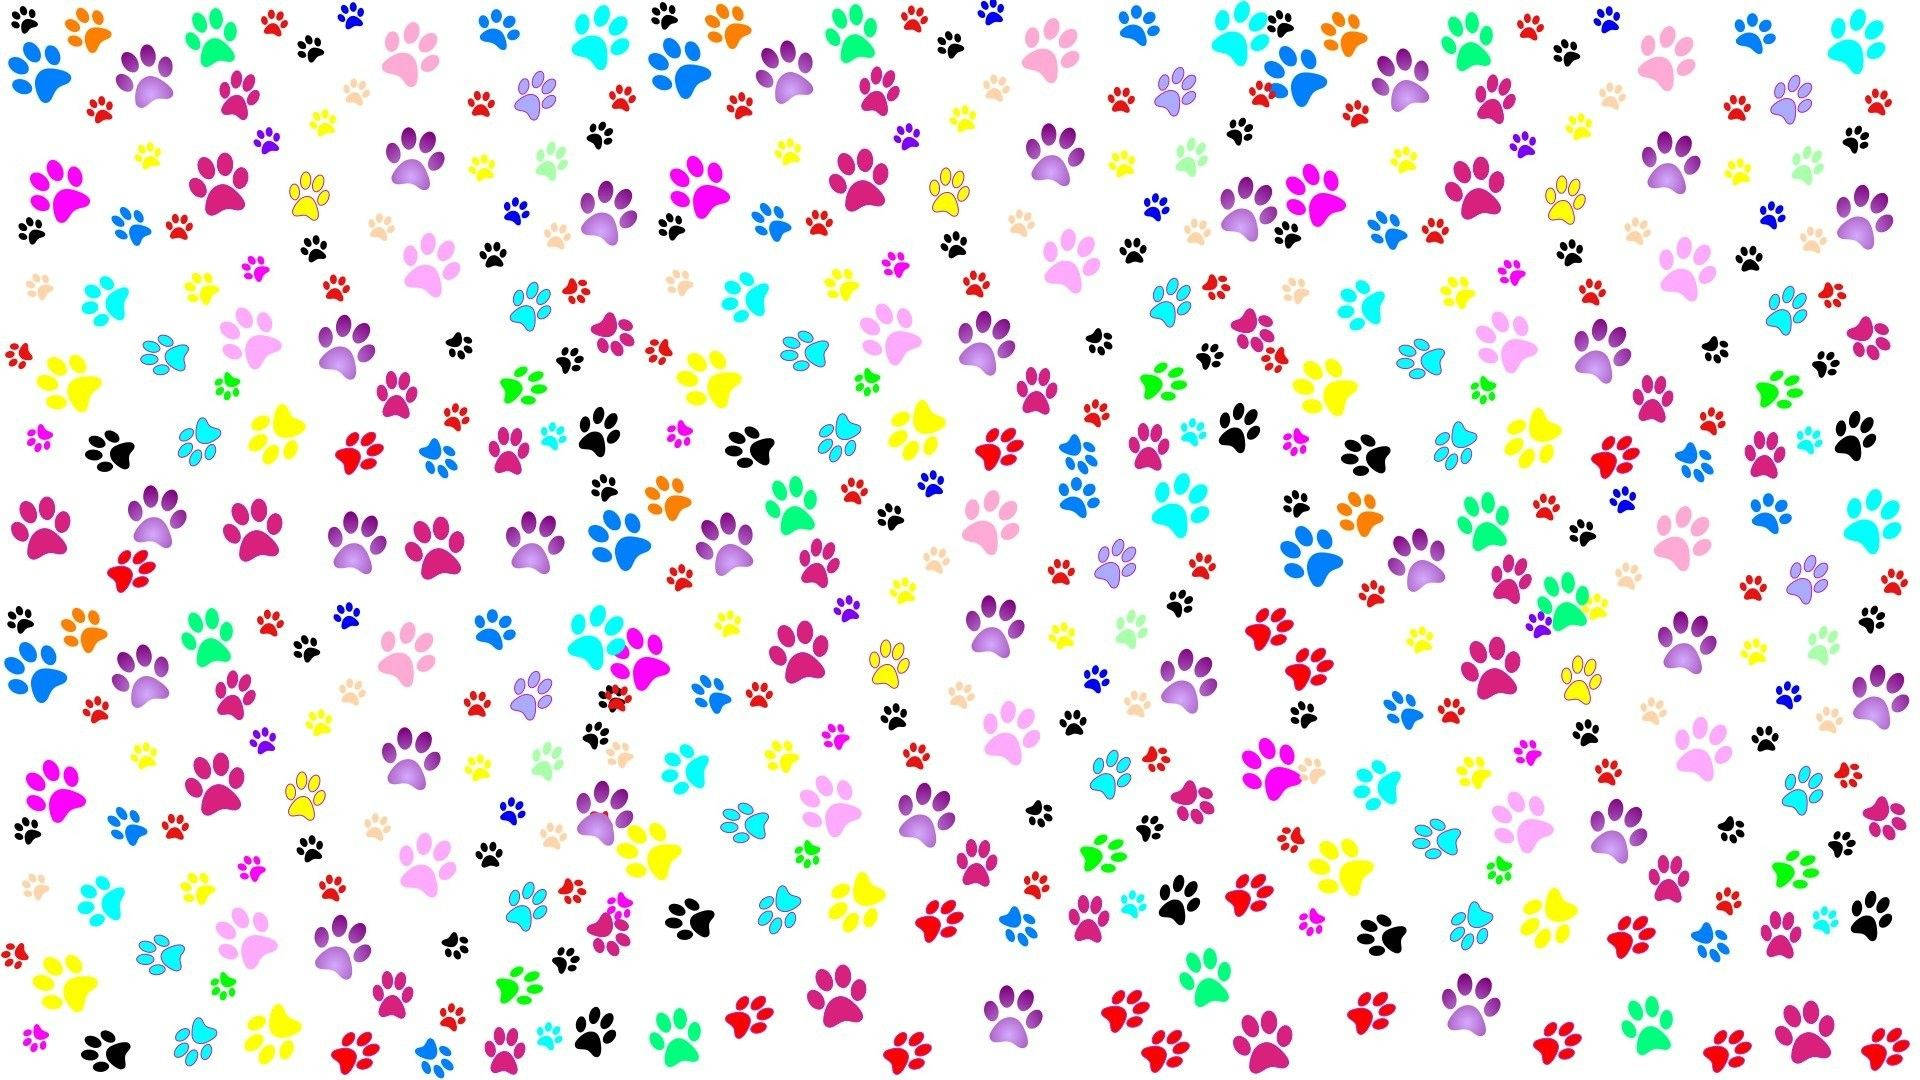 Colorful Paw Print Patterns Wallpaper